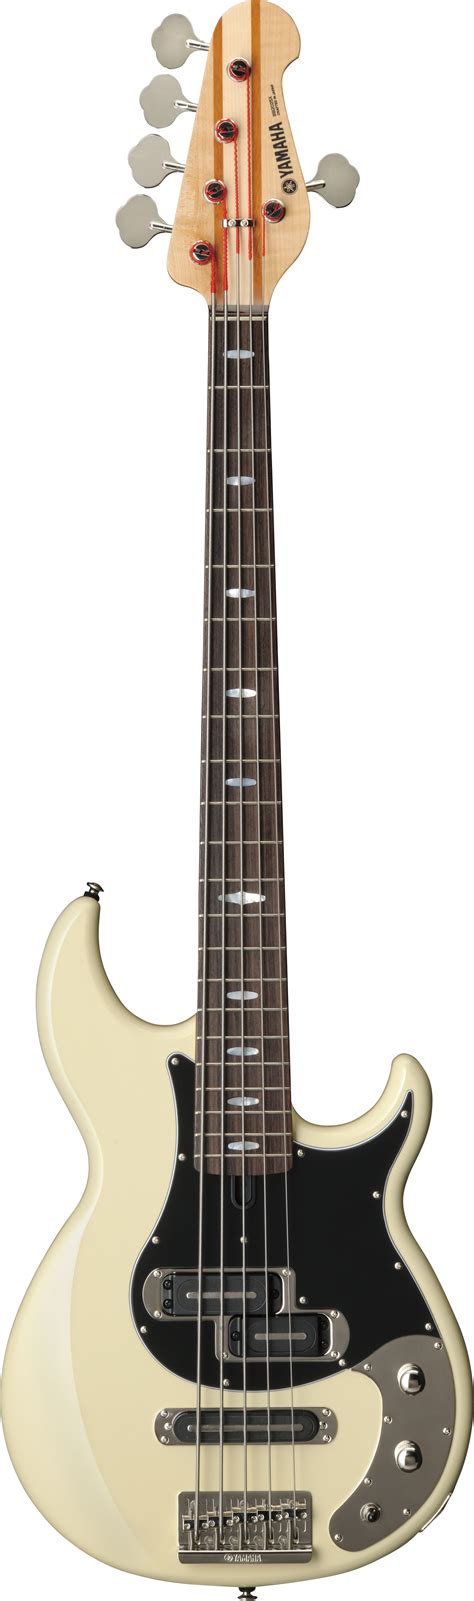 Yamaha 6 String Bass Guitar